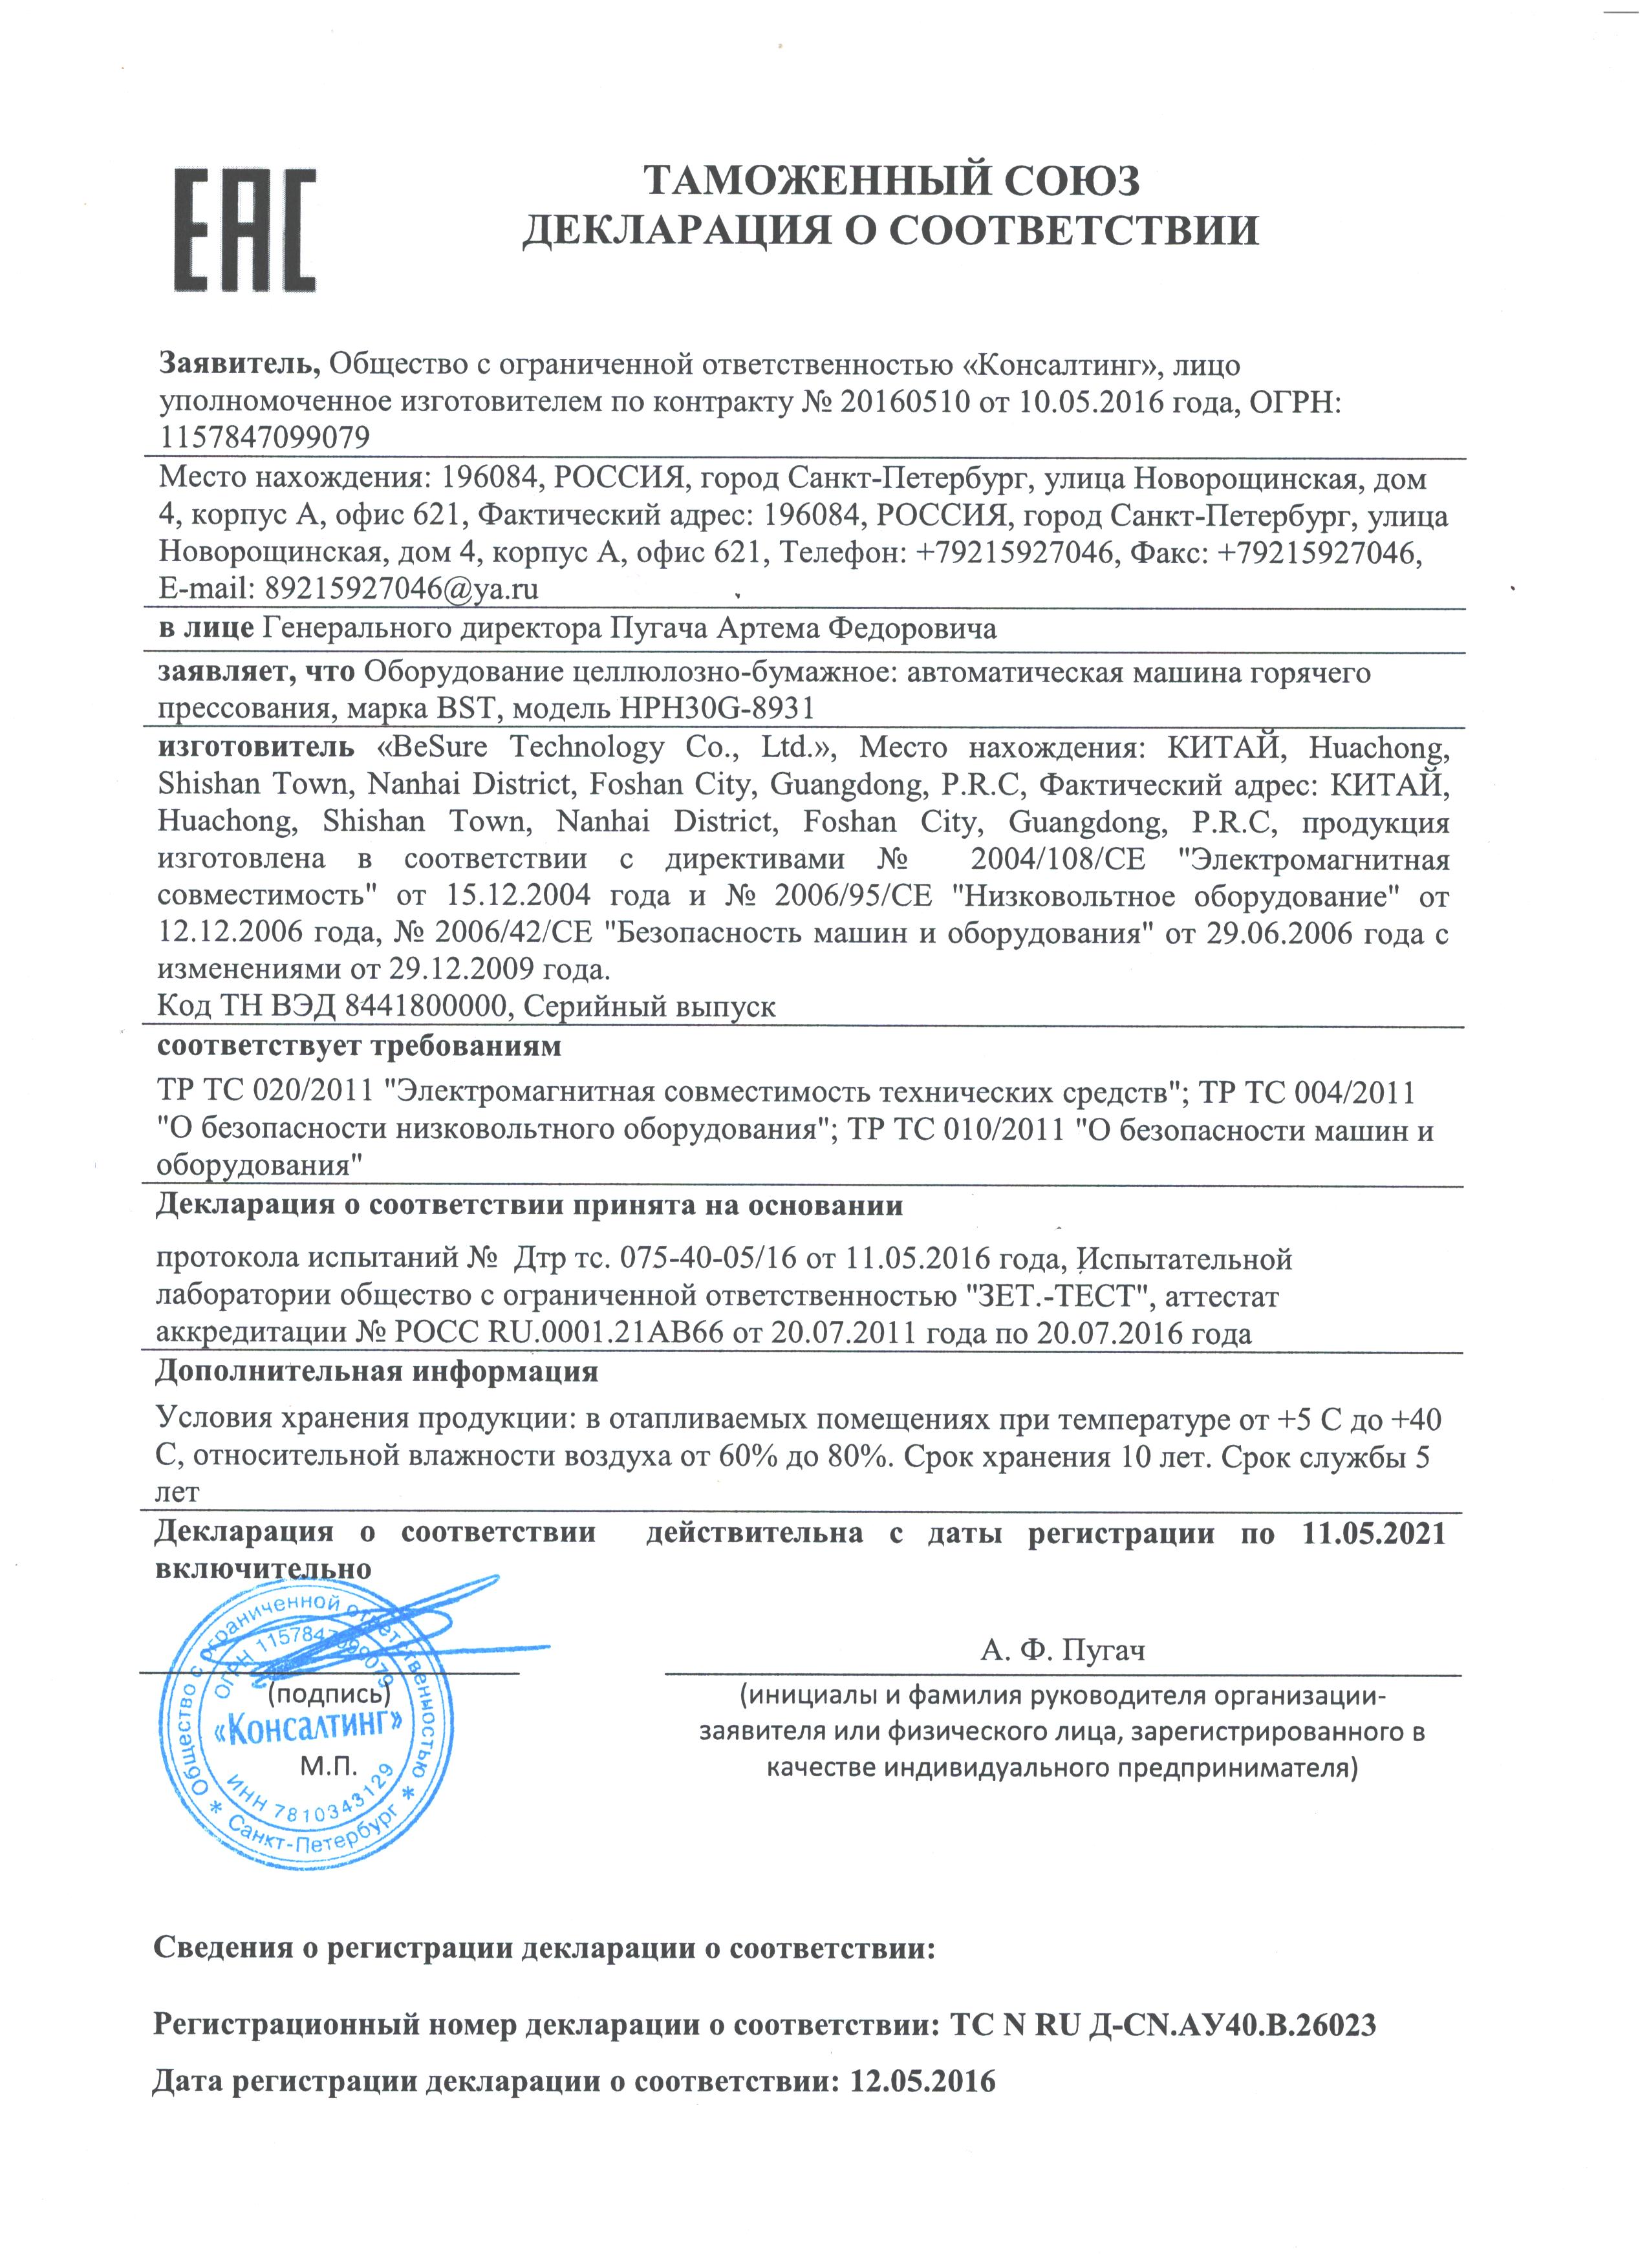 Russian CU-TR certification